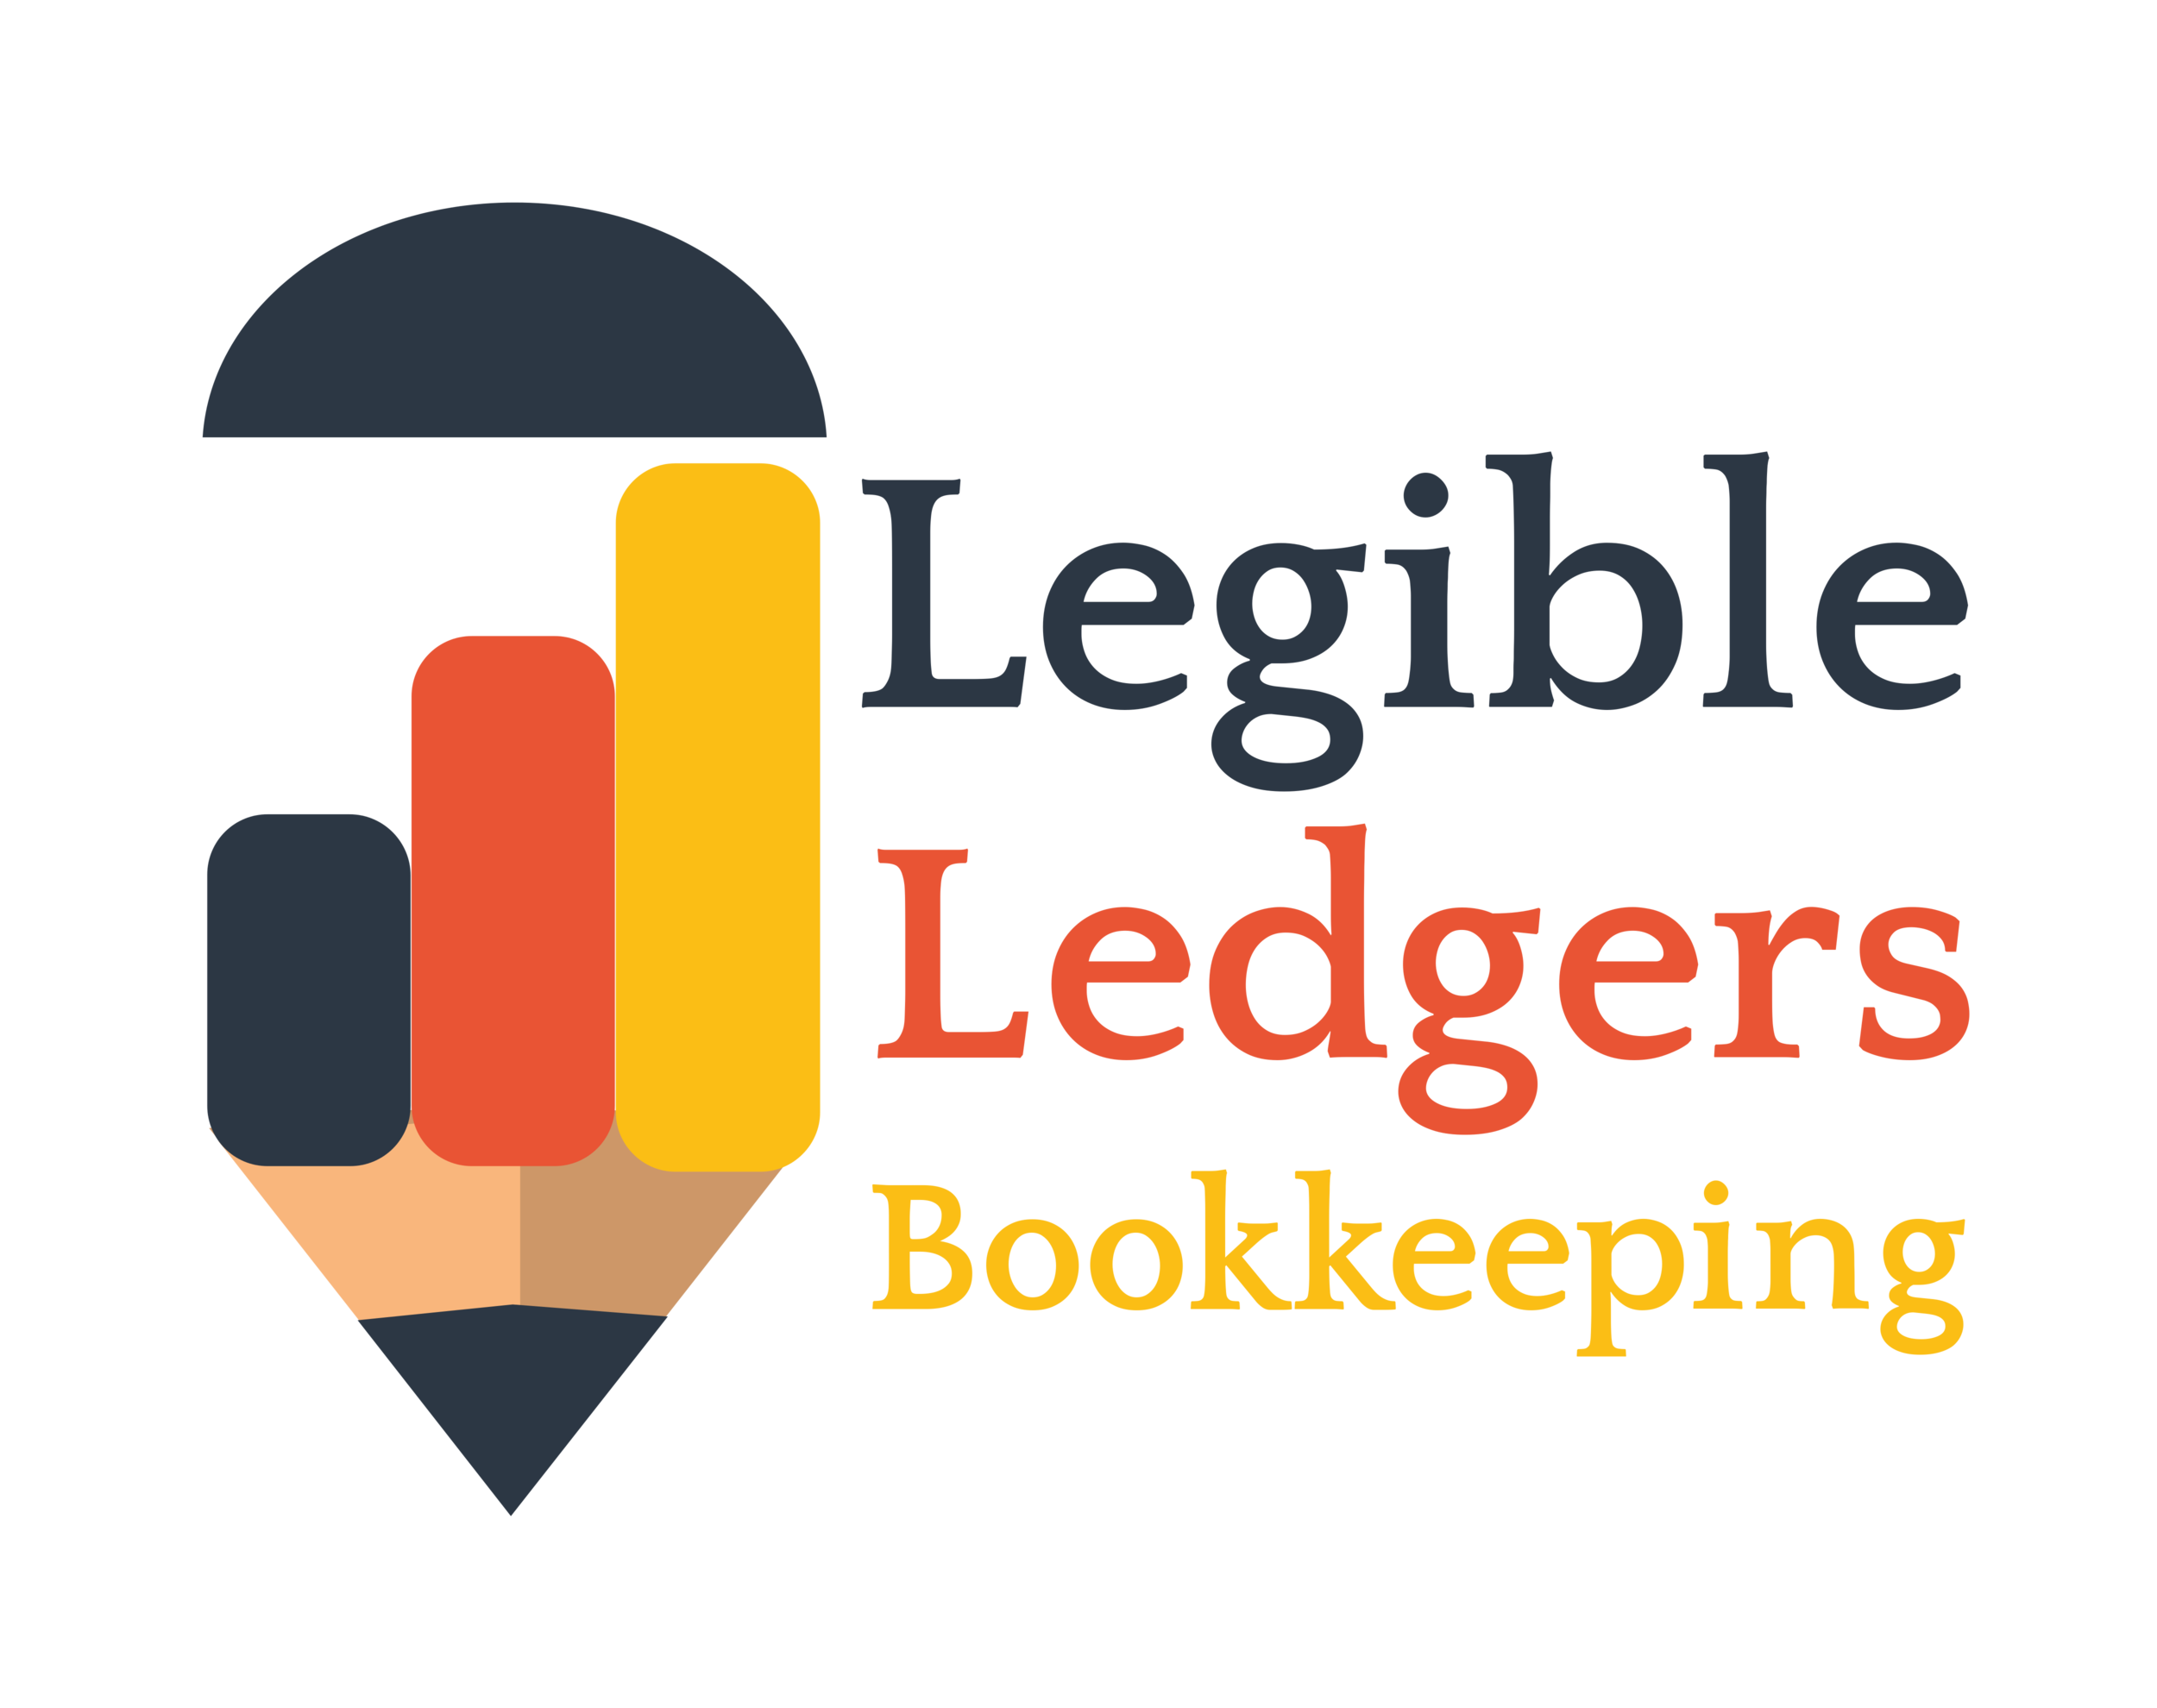 Legible Ledgers Bookkeeping